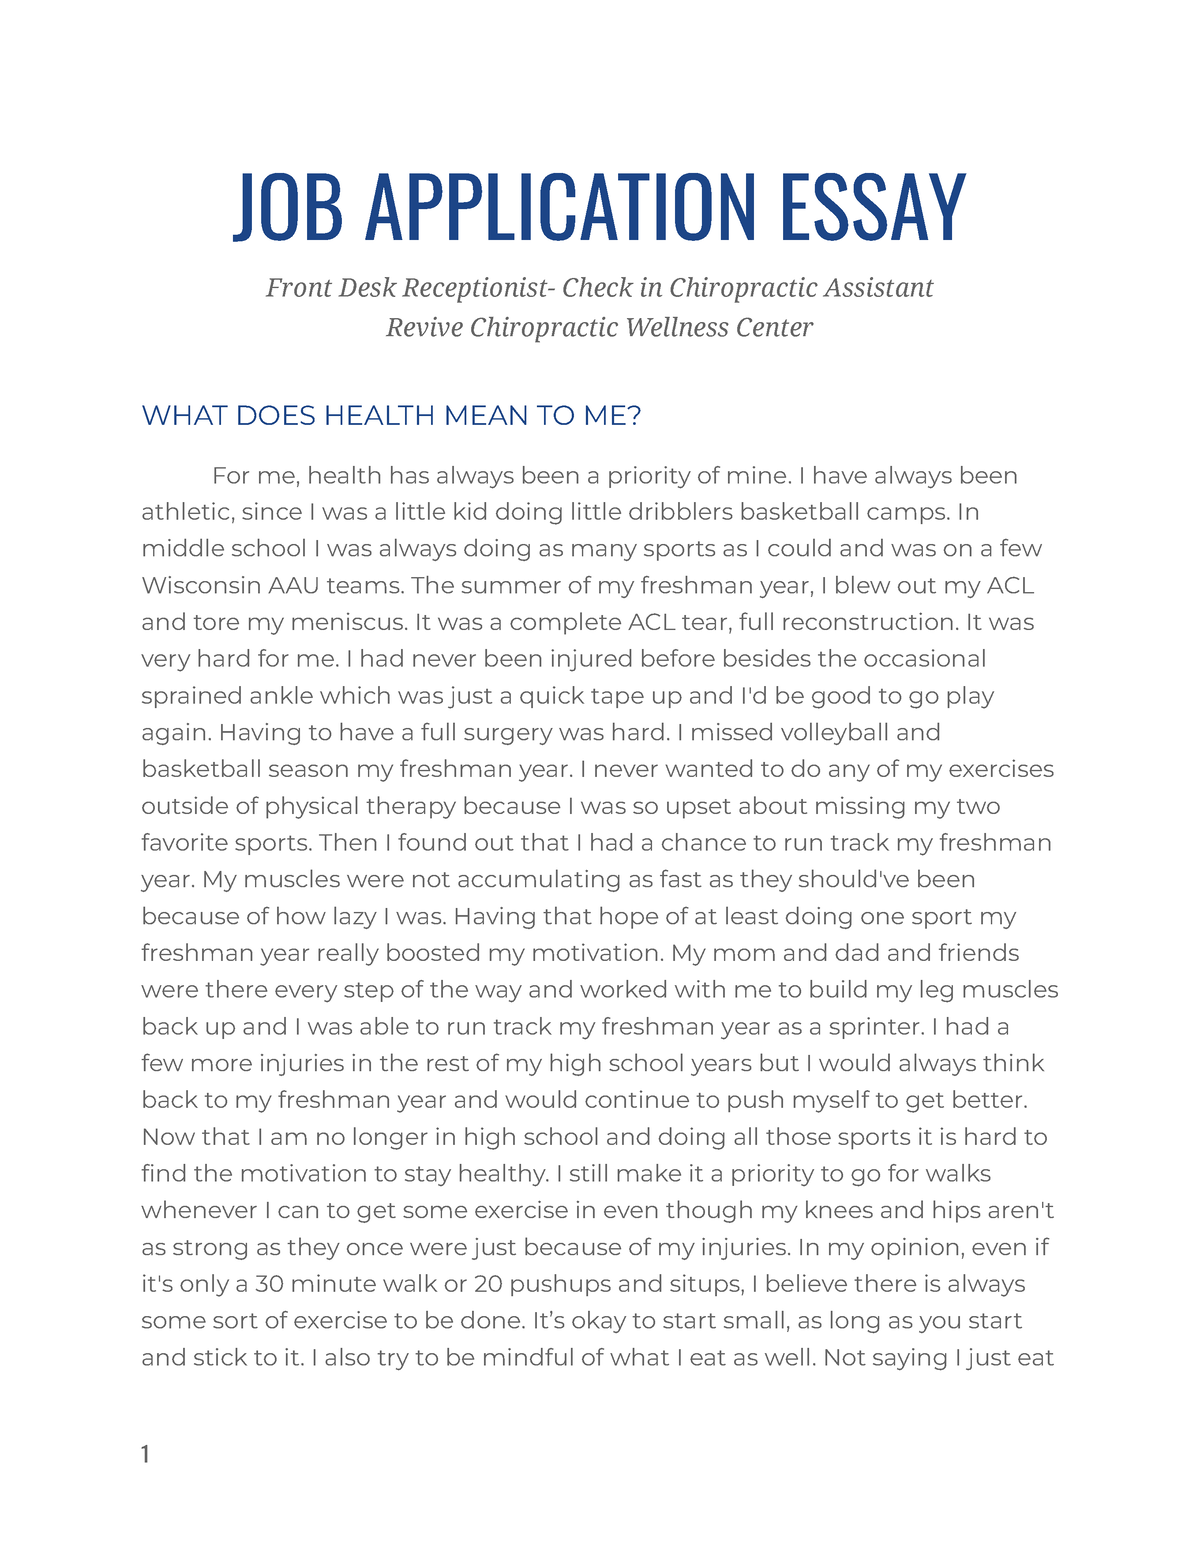 describe your idea of the perfect job essay